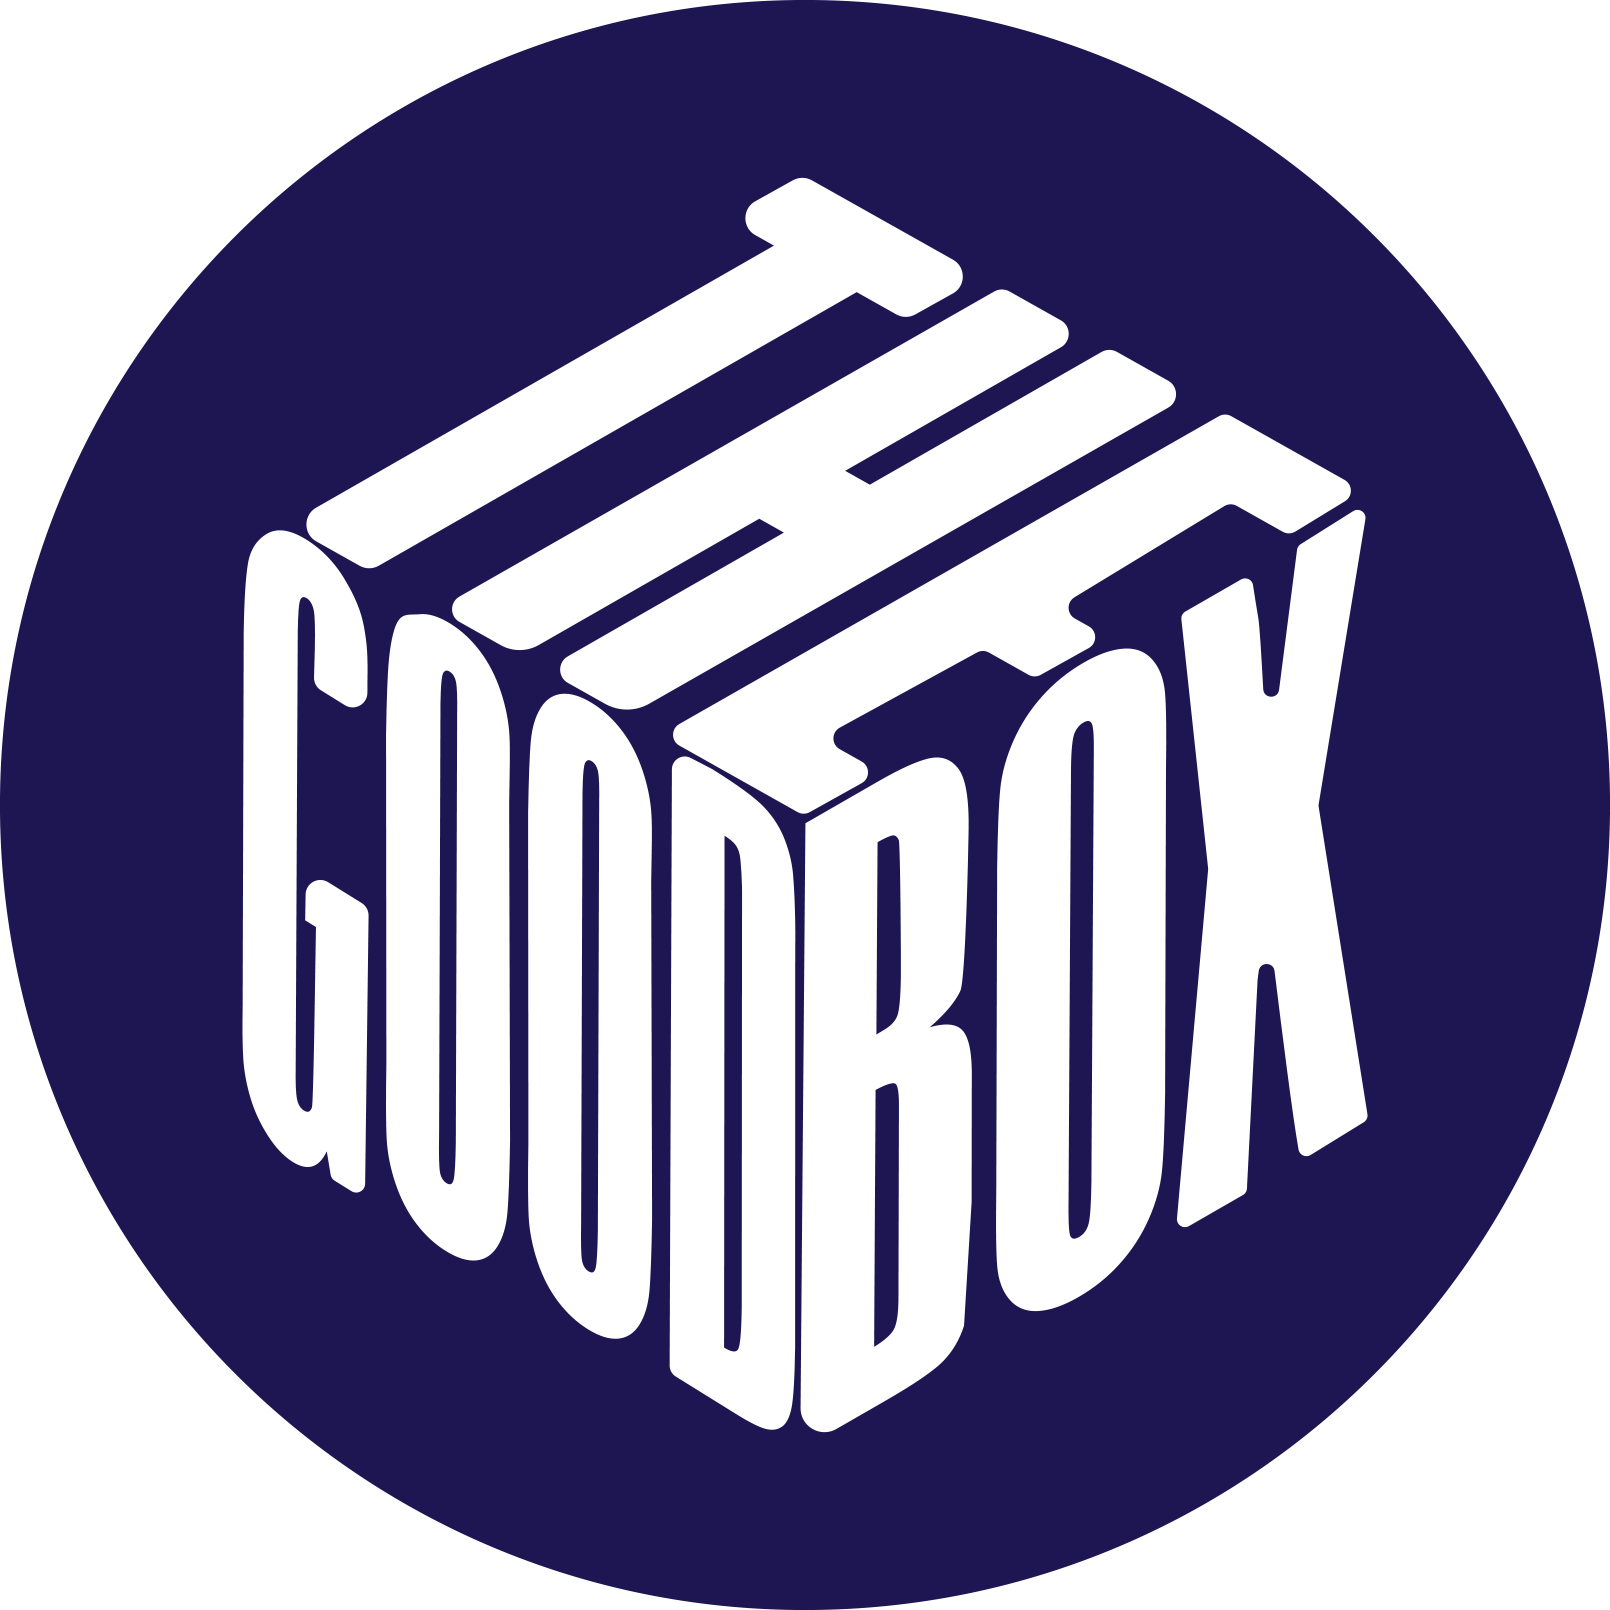 The Good Box logo